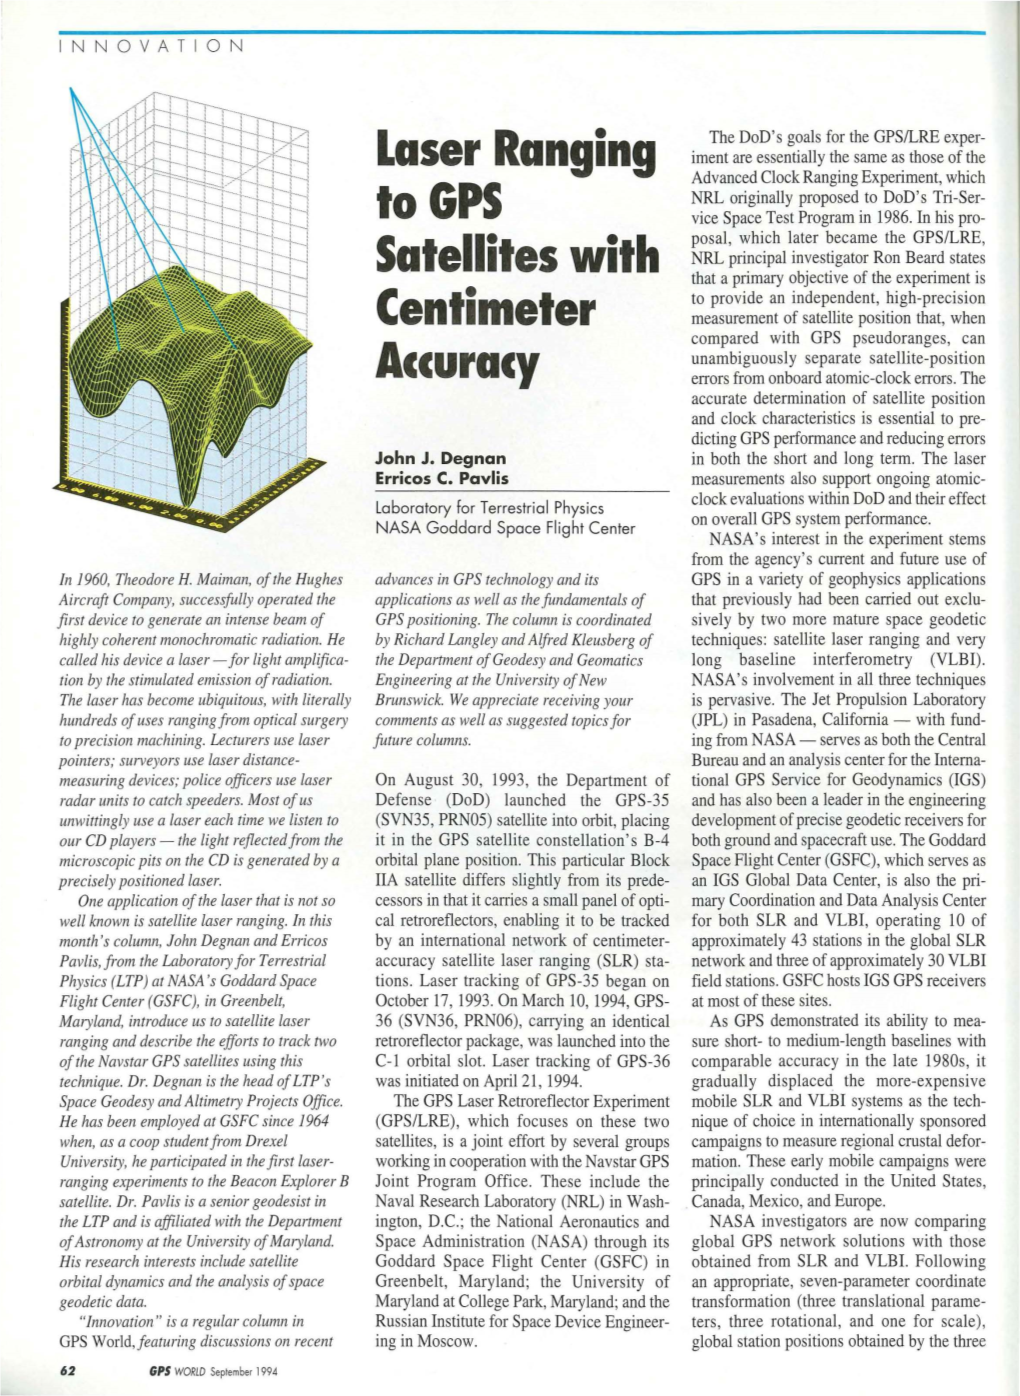 Laser Ranging Togps Satellites with Centimeter Accuracy